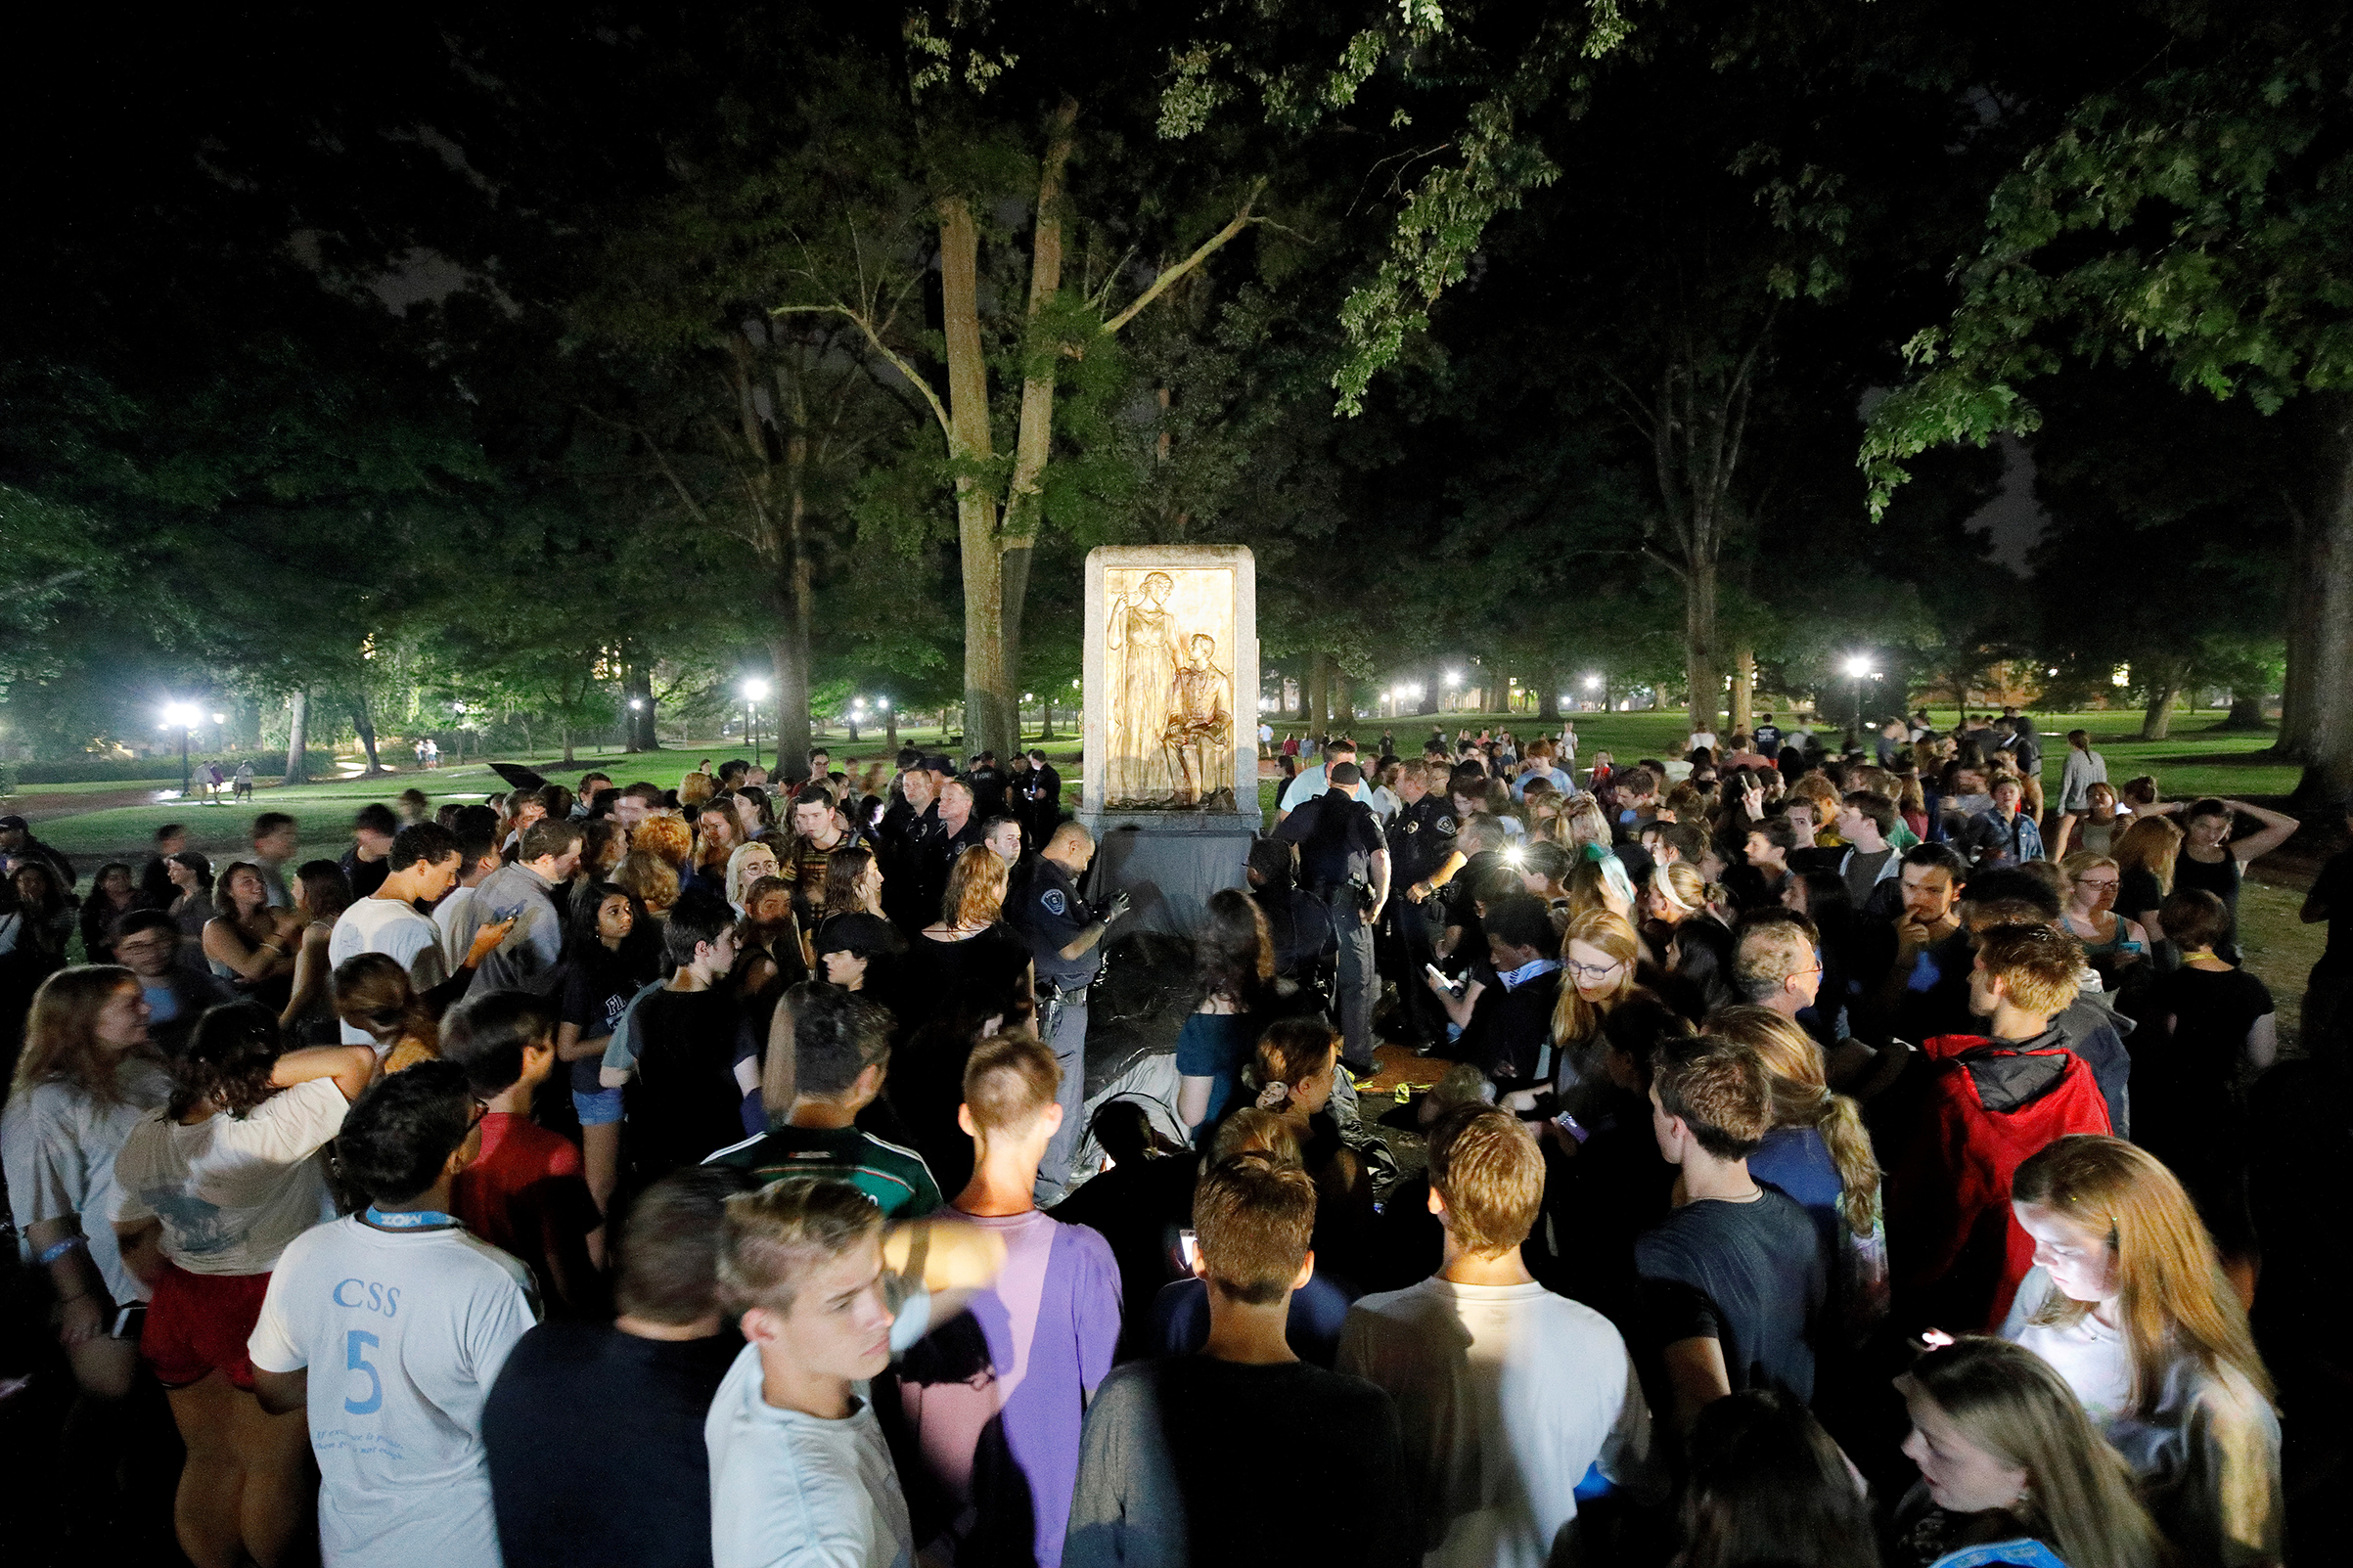 Students and protesters at University of North Carolina